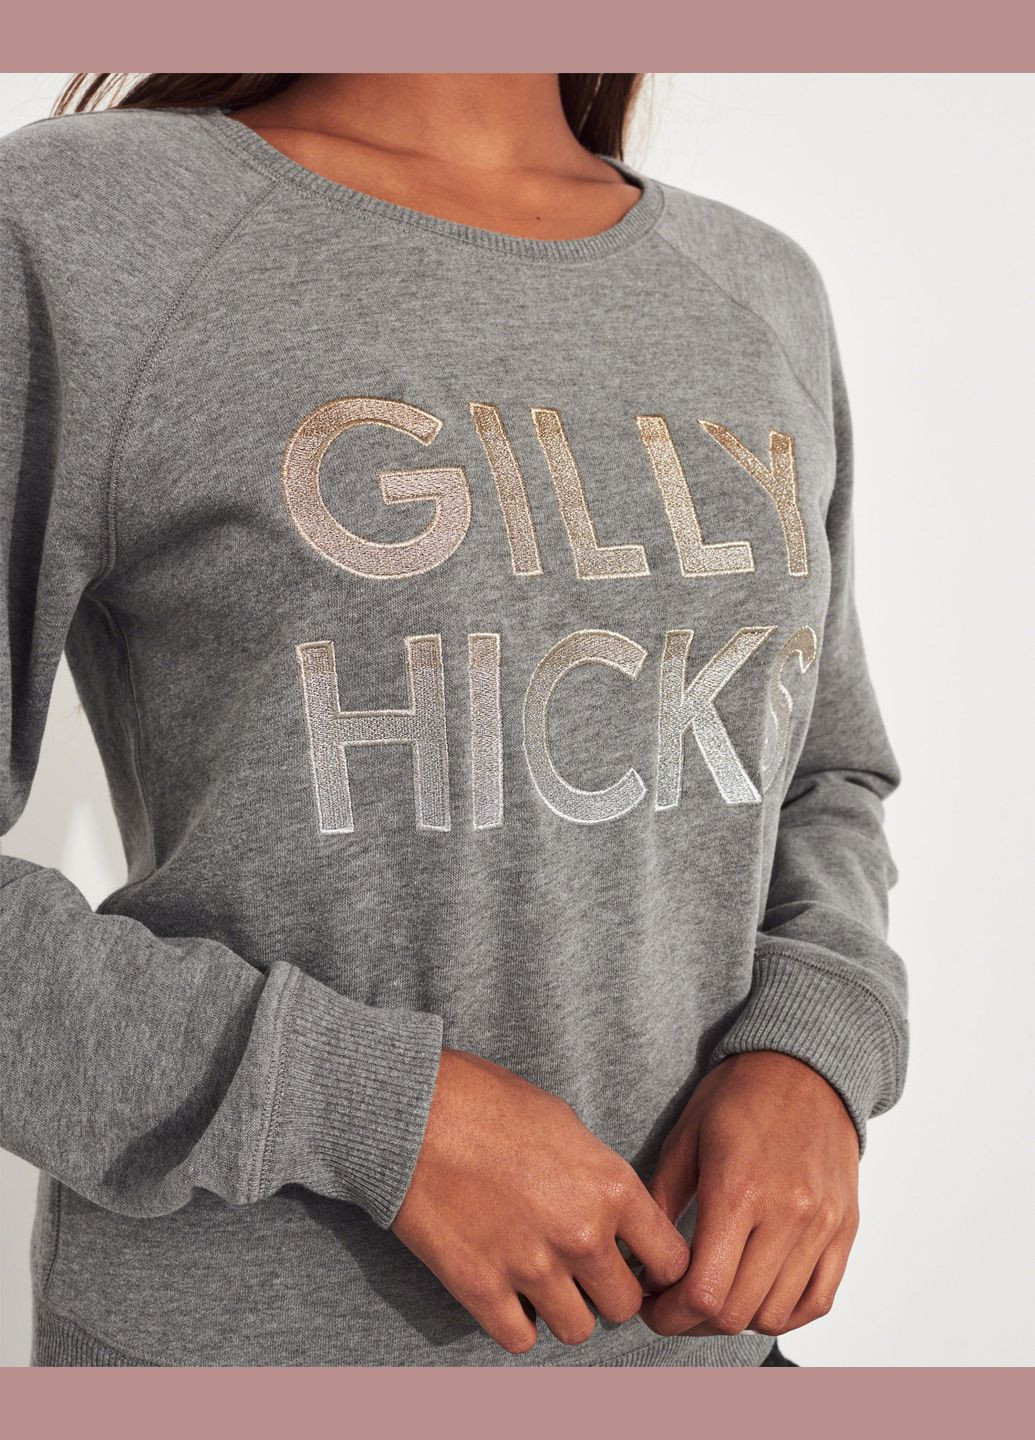 Свитшот женский - свитшот Gilly Hicks 10067 HC5223W Hollister - крой серый - (263607406)